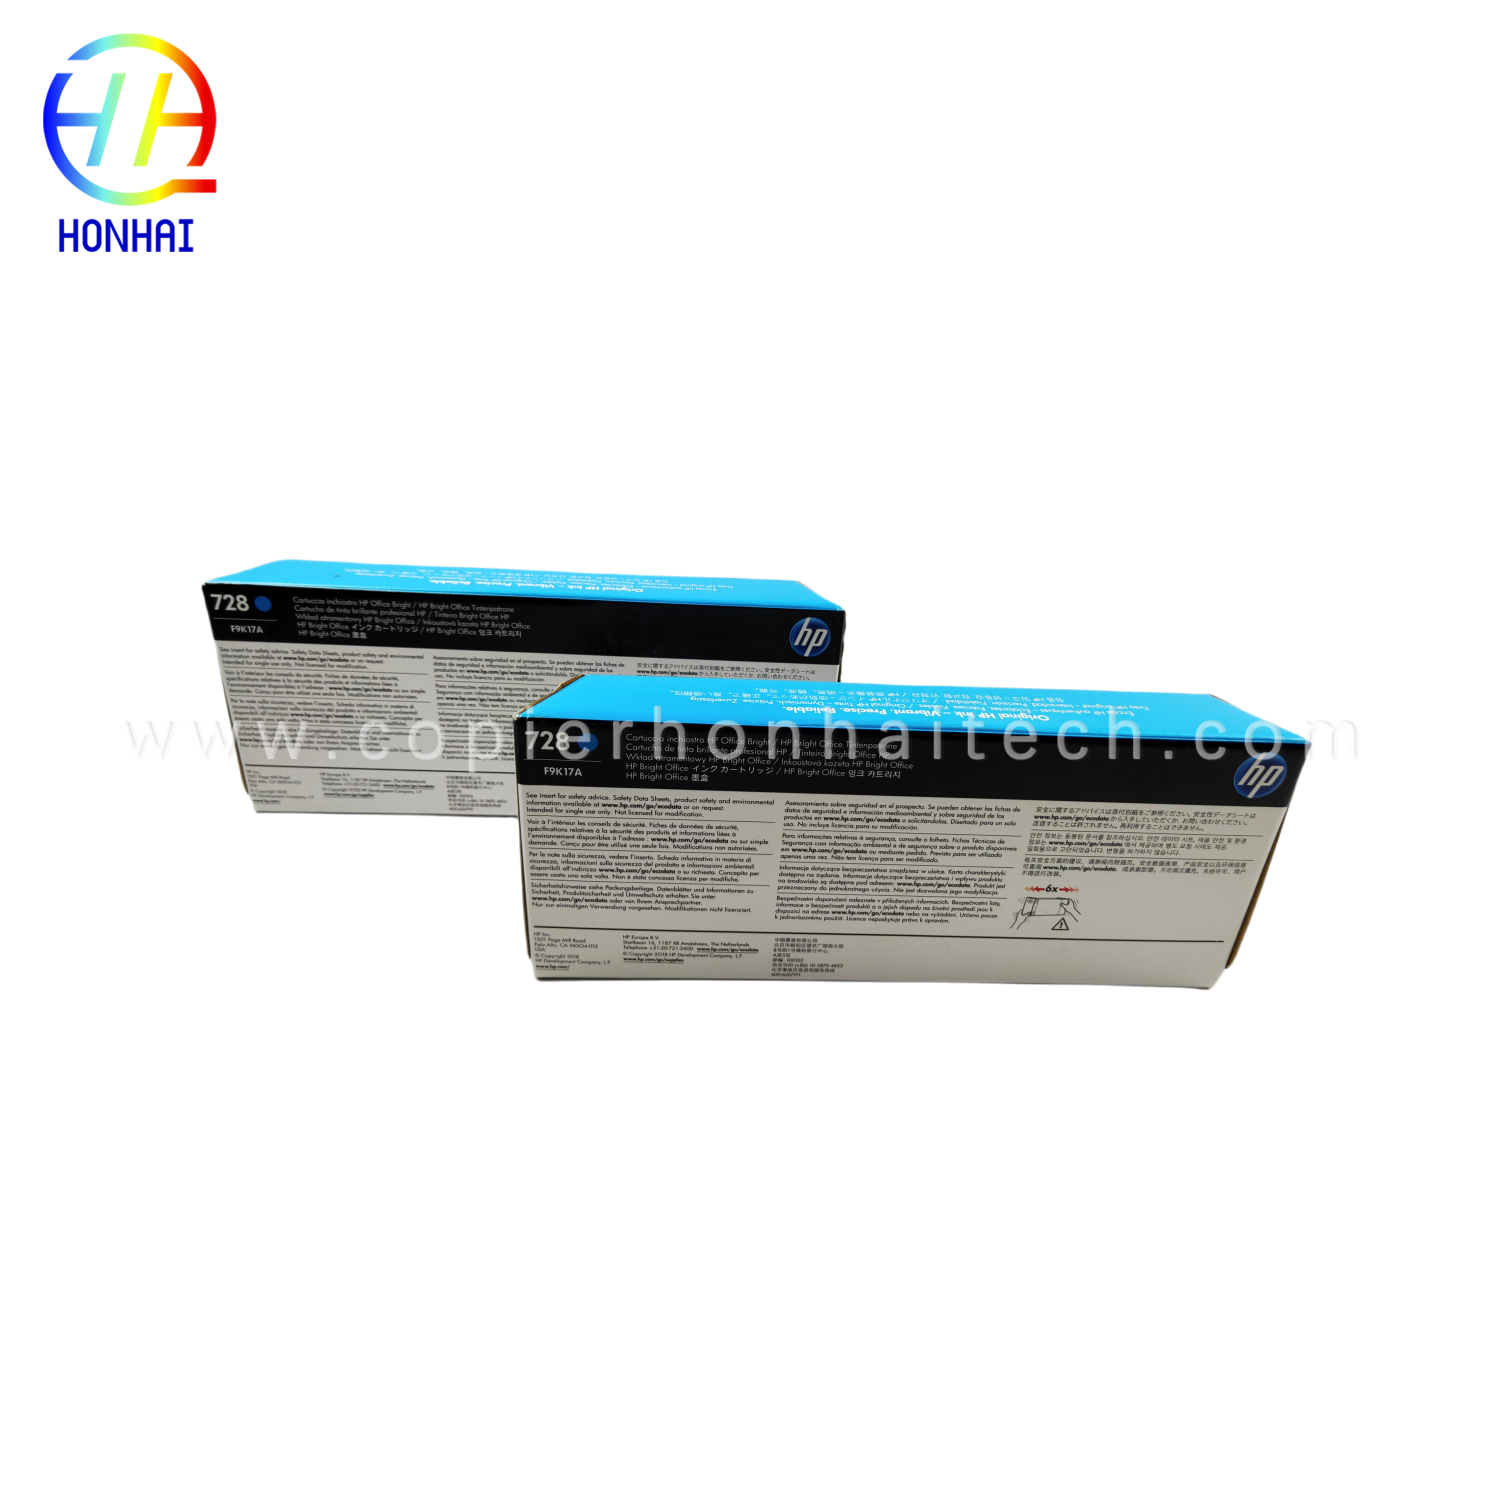 https://www.copierhonhaitech.com/original-new-ink-cartridge-cyan-for-hp-designjet-t730-and-t830-large-format-plotter-printers-and-hp-729-designjet-printhead- 728-f9k17a-produkt/